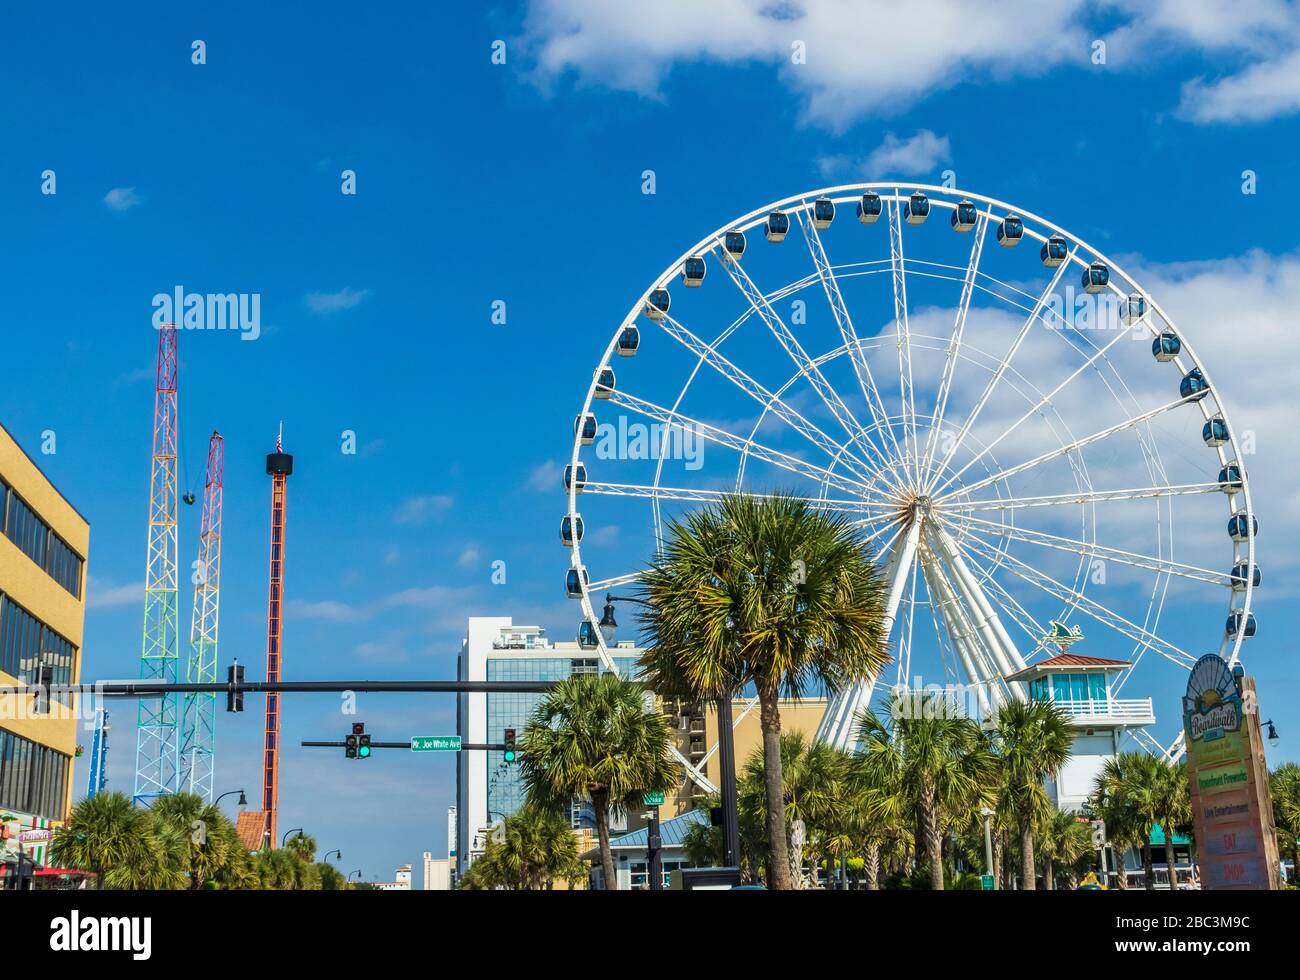 Ferris wheel in amusement park on Myrtle Beach Boardwalk along north ocean blvd in Myrtle Beach, South Carolina. Stock Photo